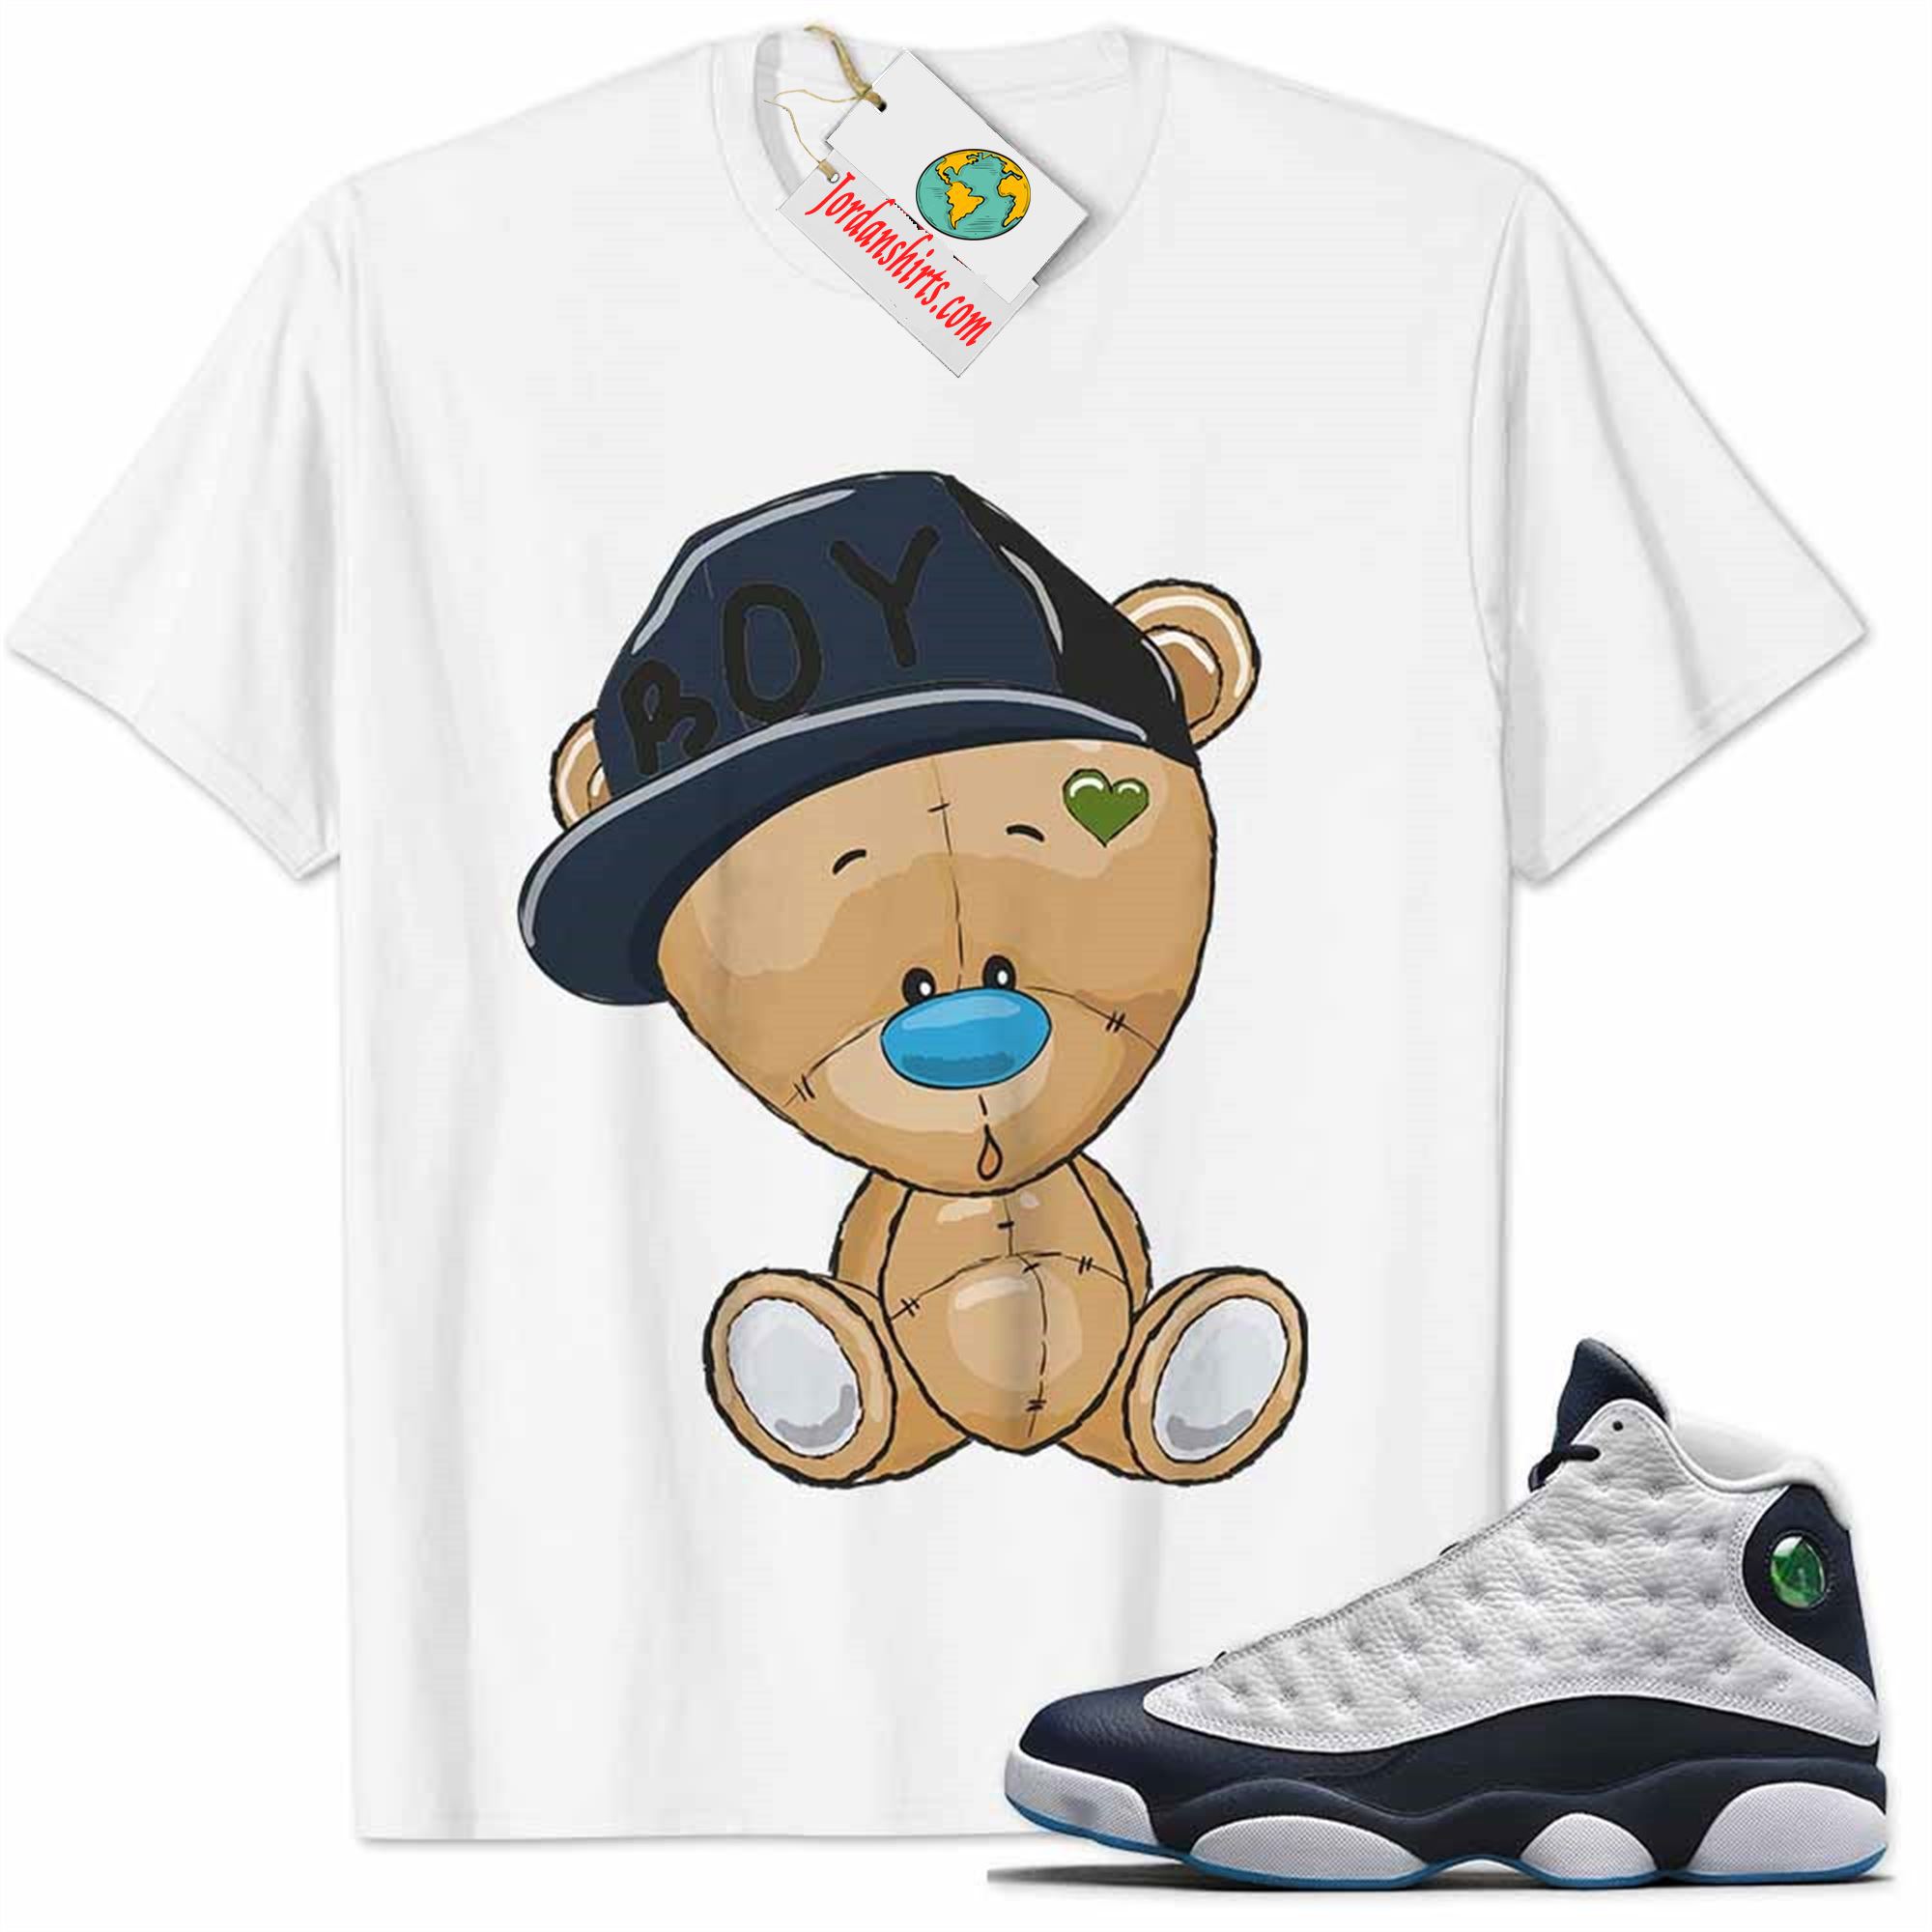 Jordan 13 Shirt, Jordan 13 Obsidian Shirt Cute Baby Teddy Bear White Full Size Up To 5xl